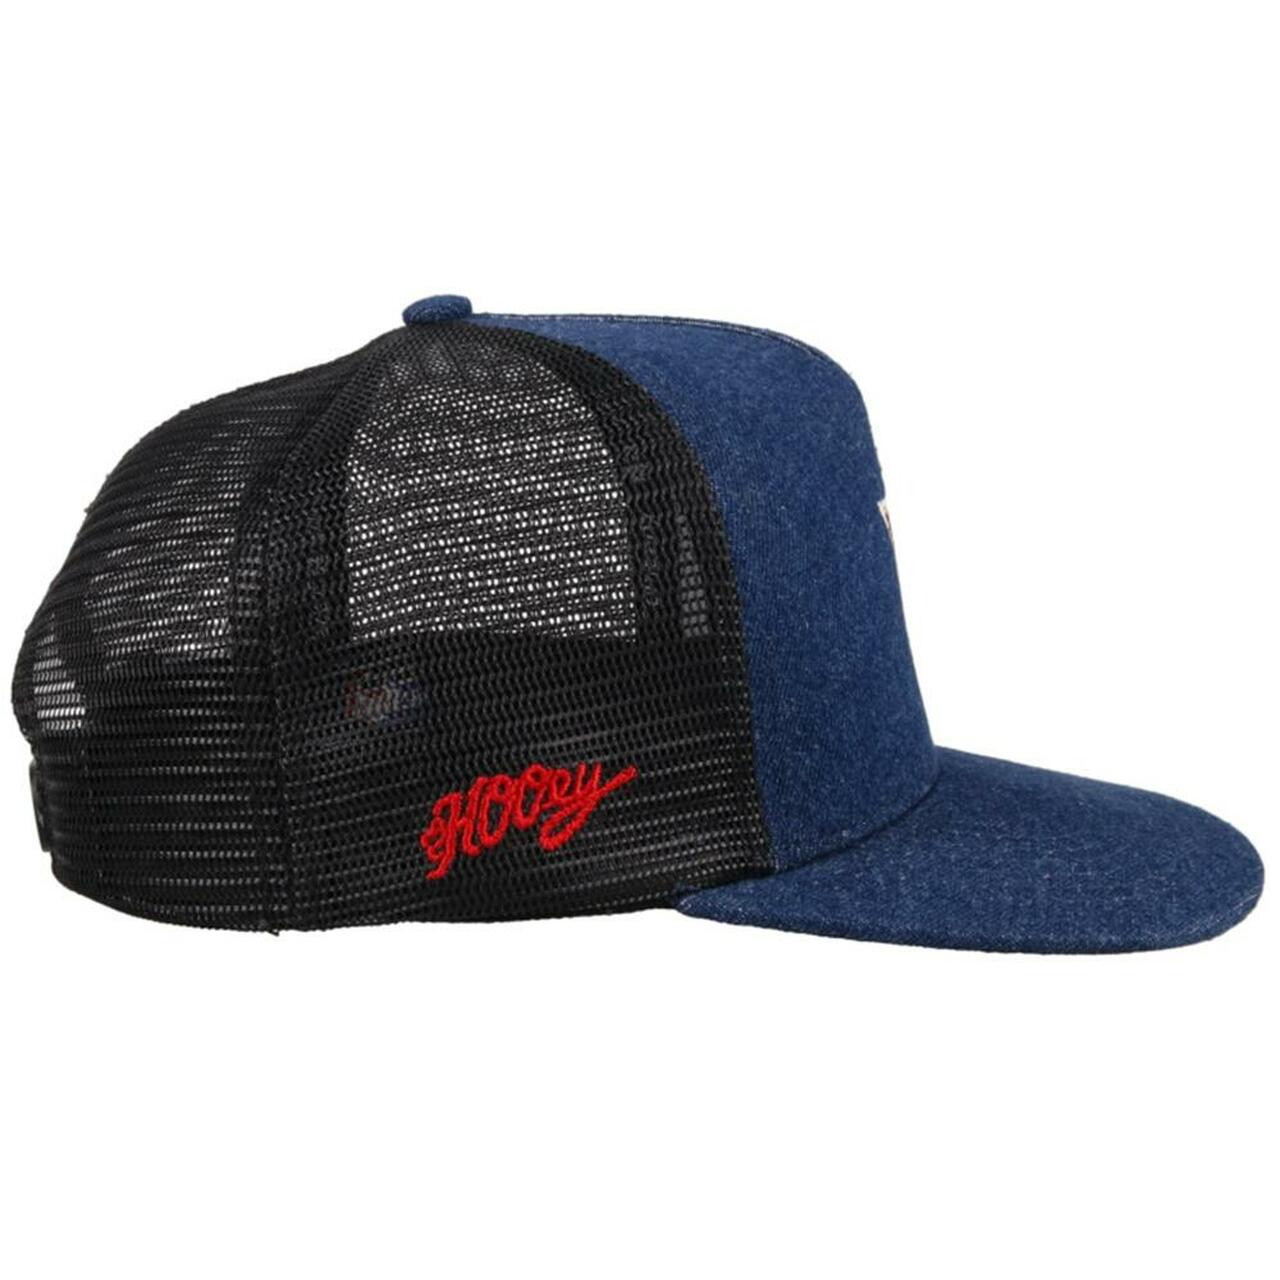 Hooey Lone Star Beer Denim Hats Cap - LS010 - Knockout Wear | Lifestyle ...